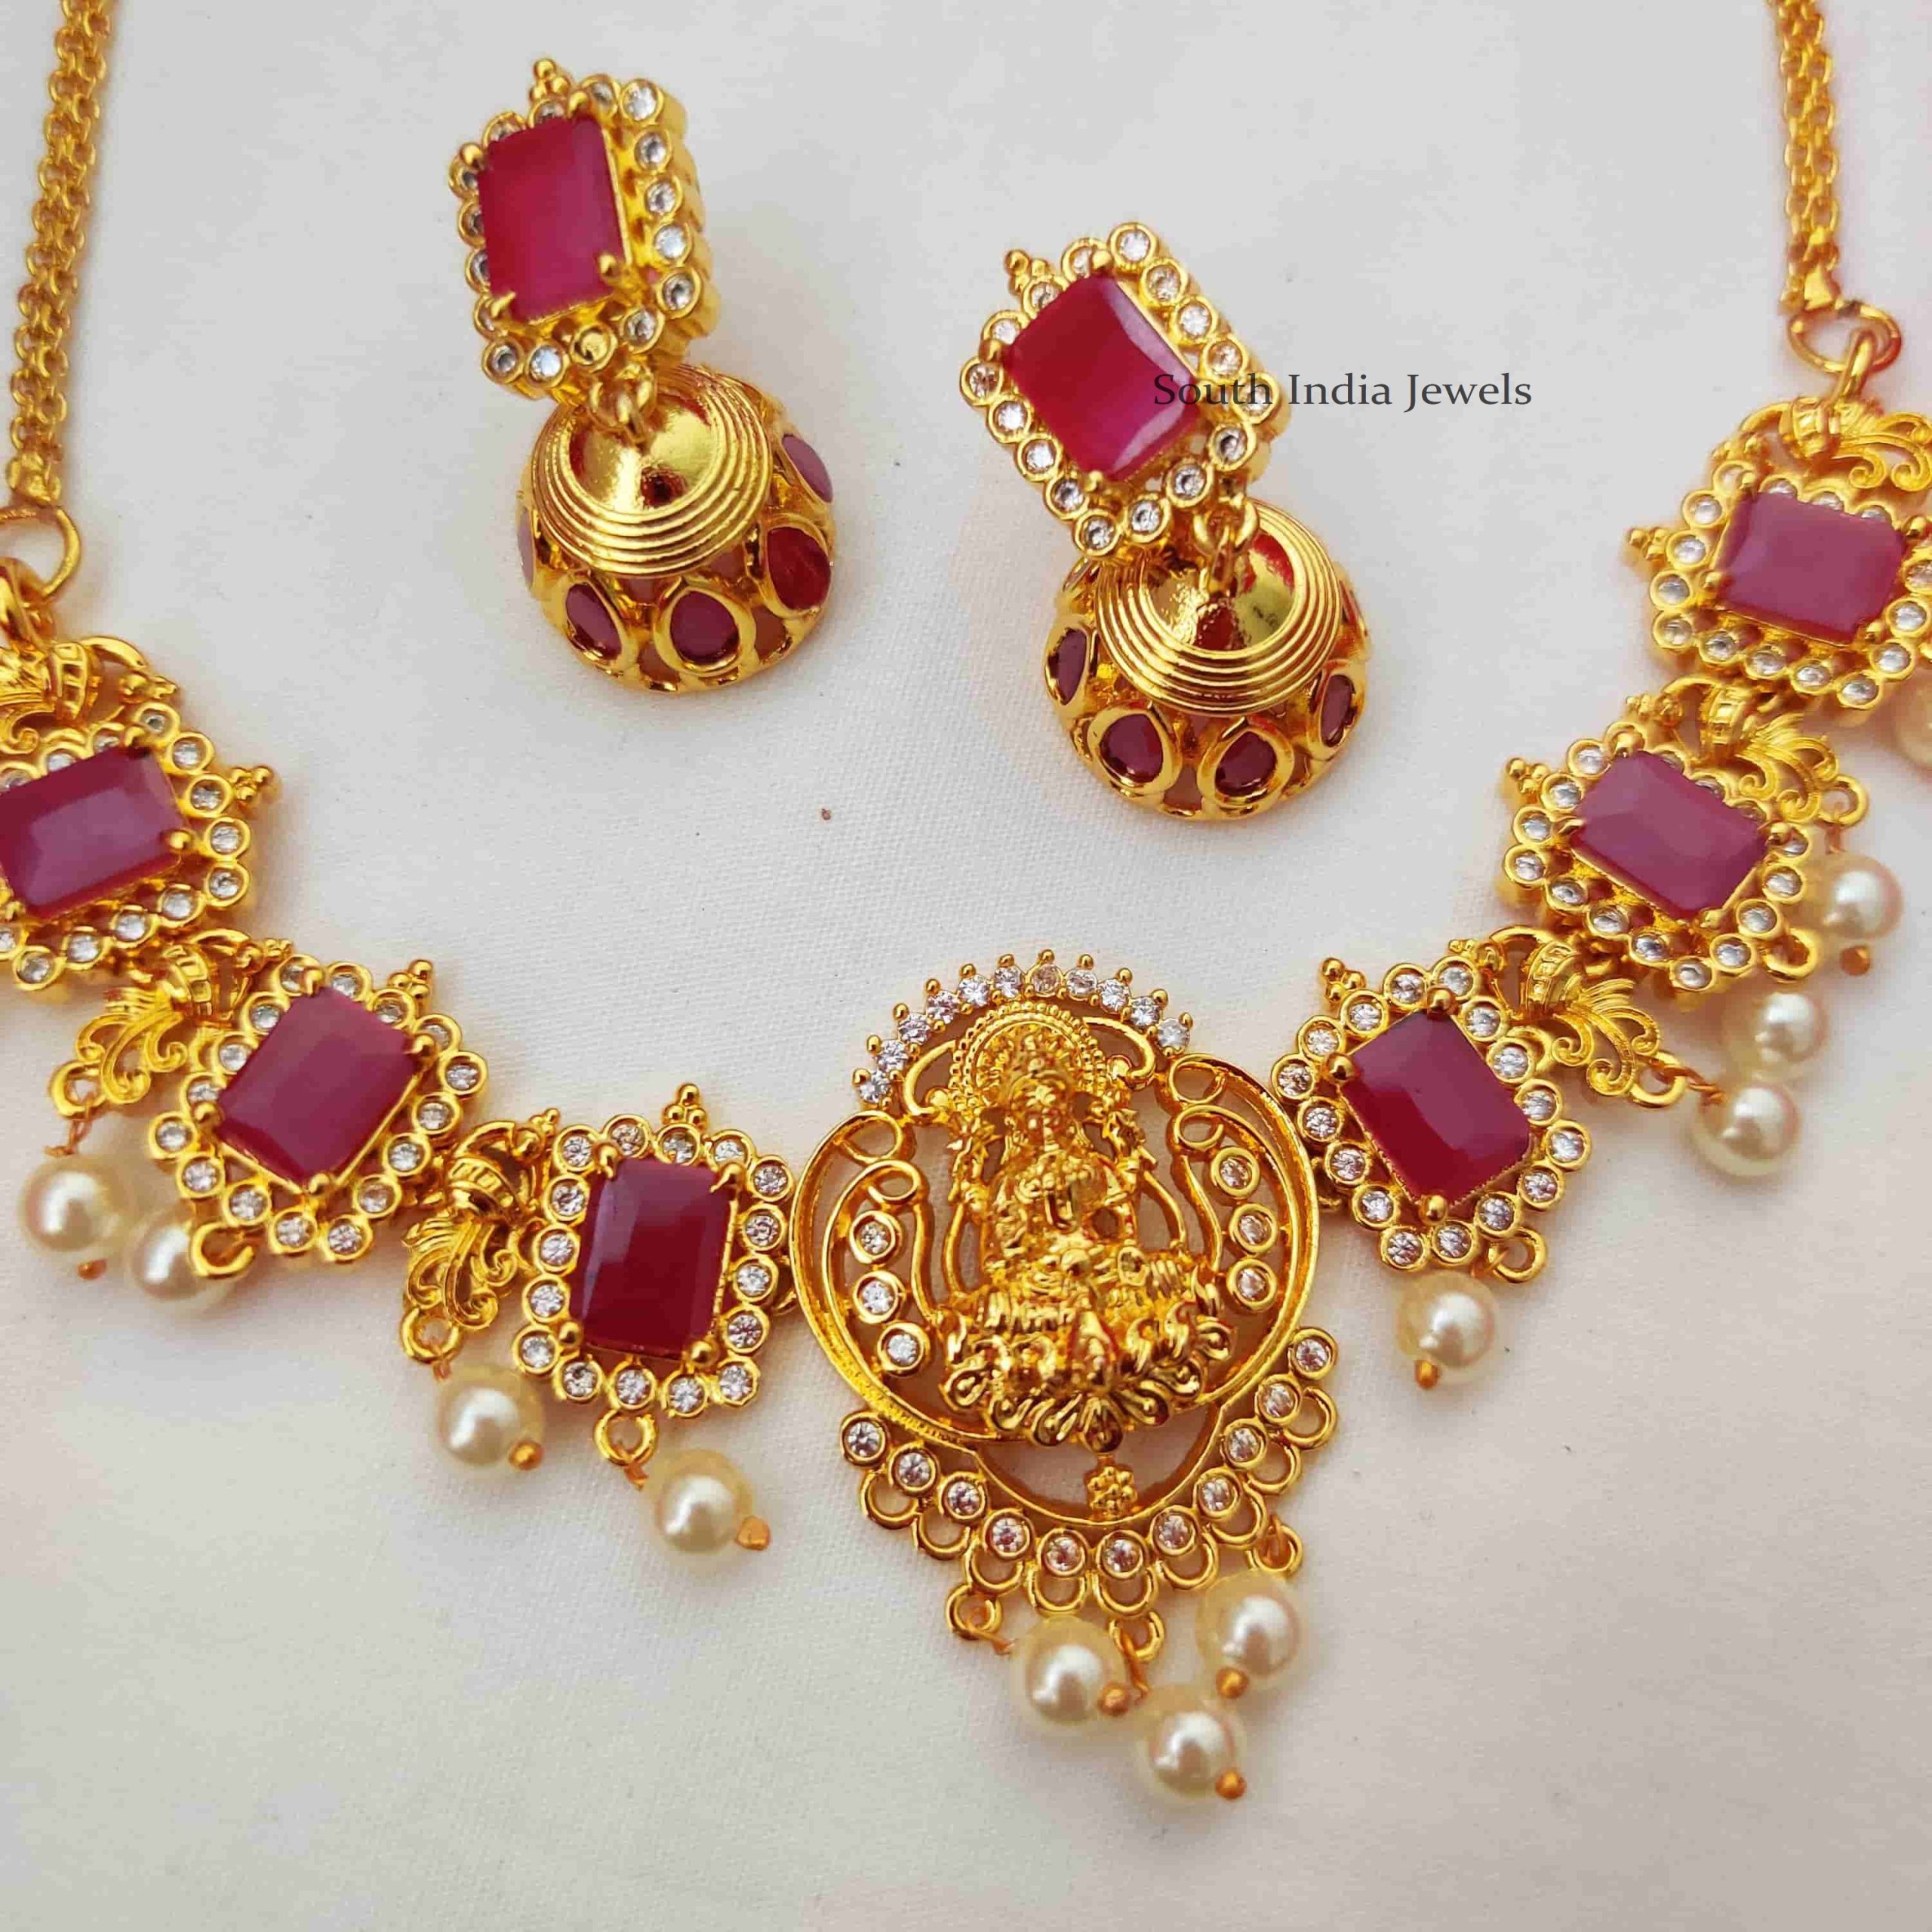 Premium Imitation Jewellery - Classic Lakshmi Pink Stone Necklace